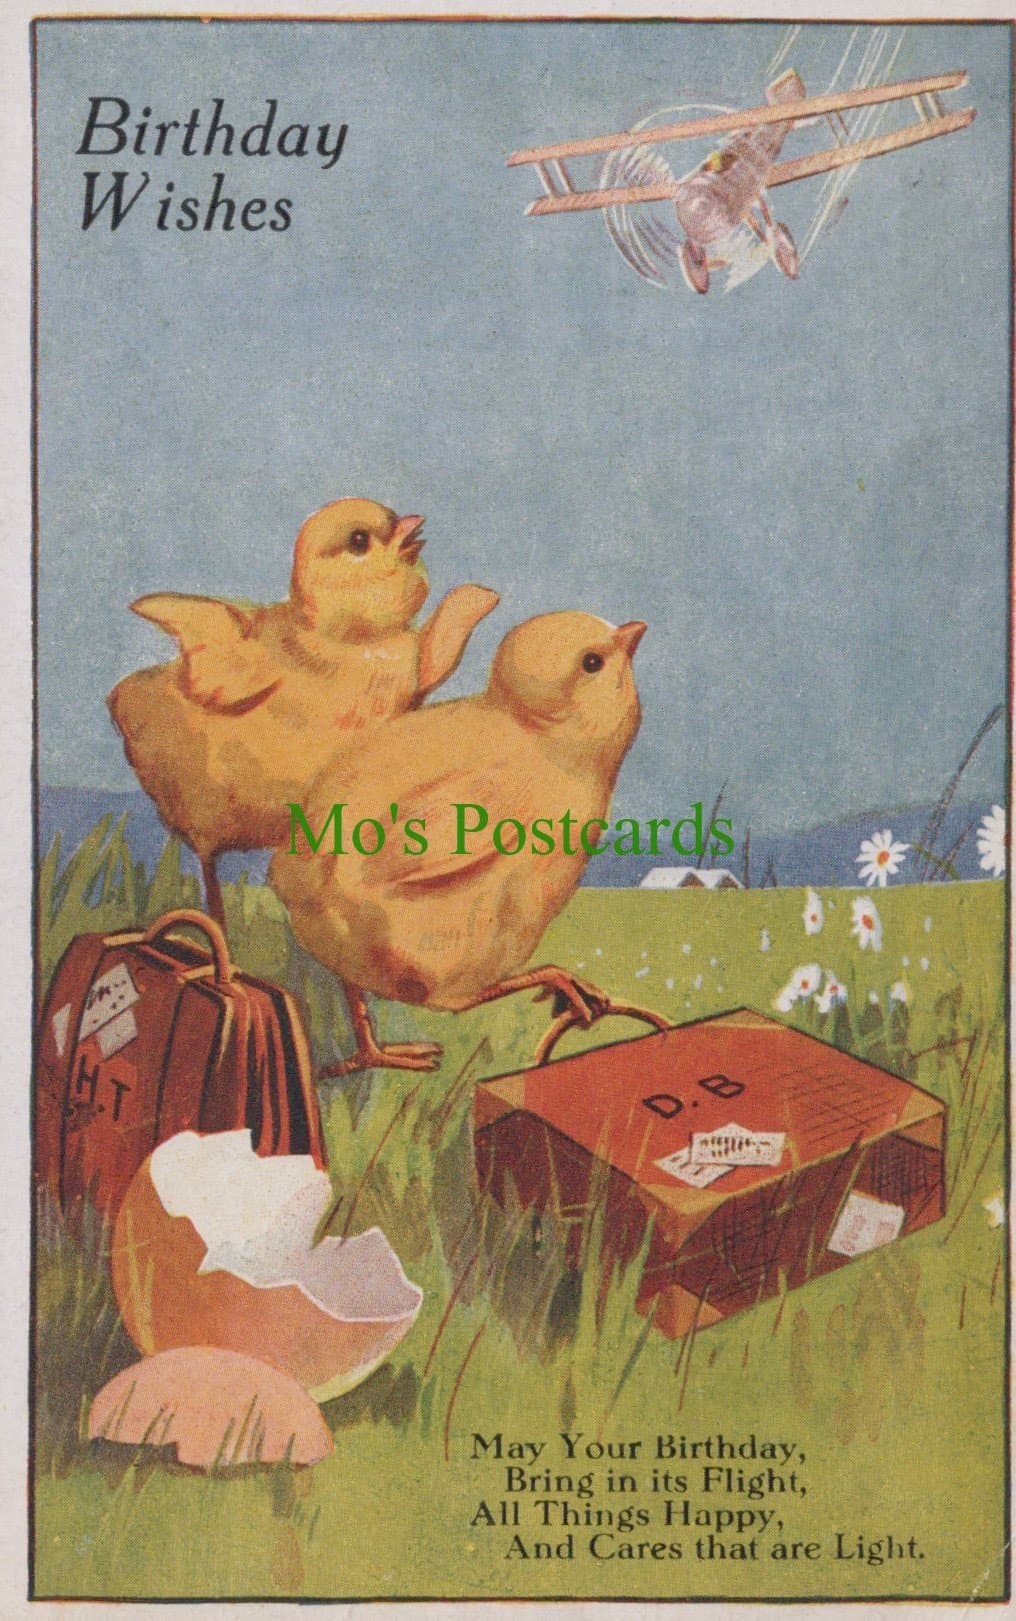 Greetings Postcard - Birthday Wishes - Chicks, Aeroplane and Luggage, 1921 - Mo’s Postcards 